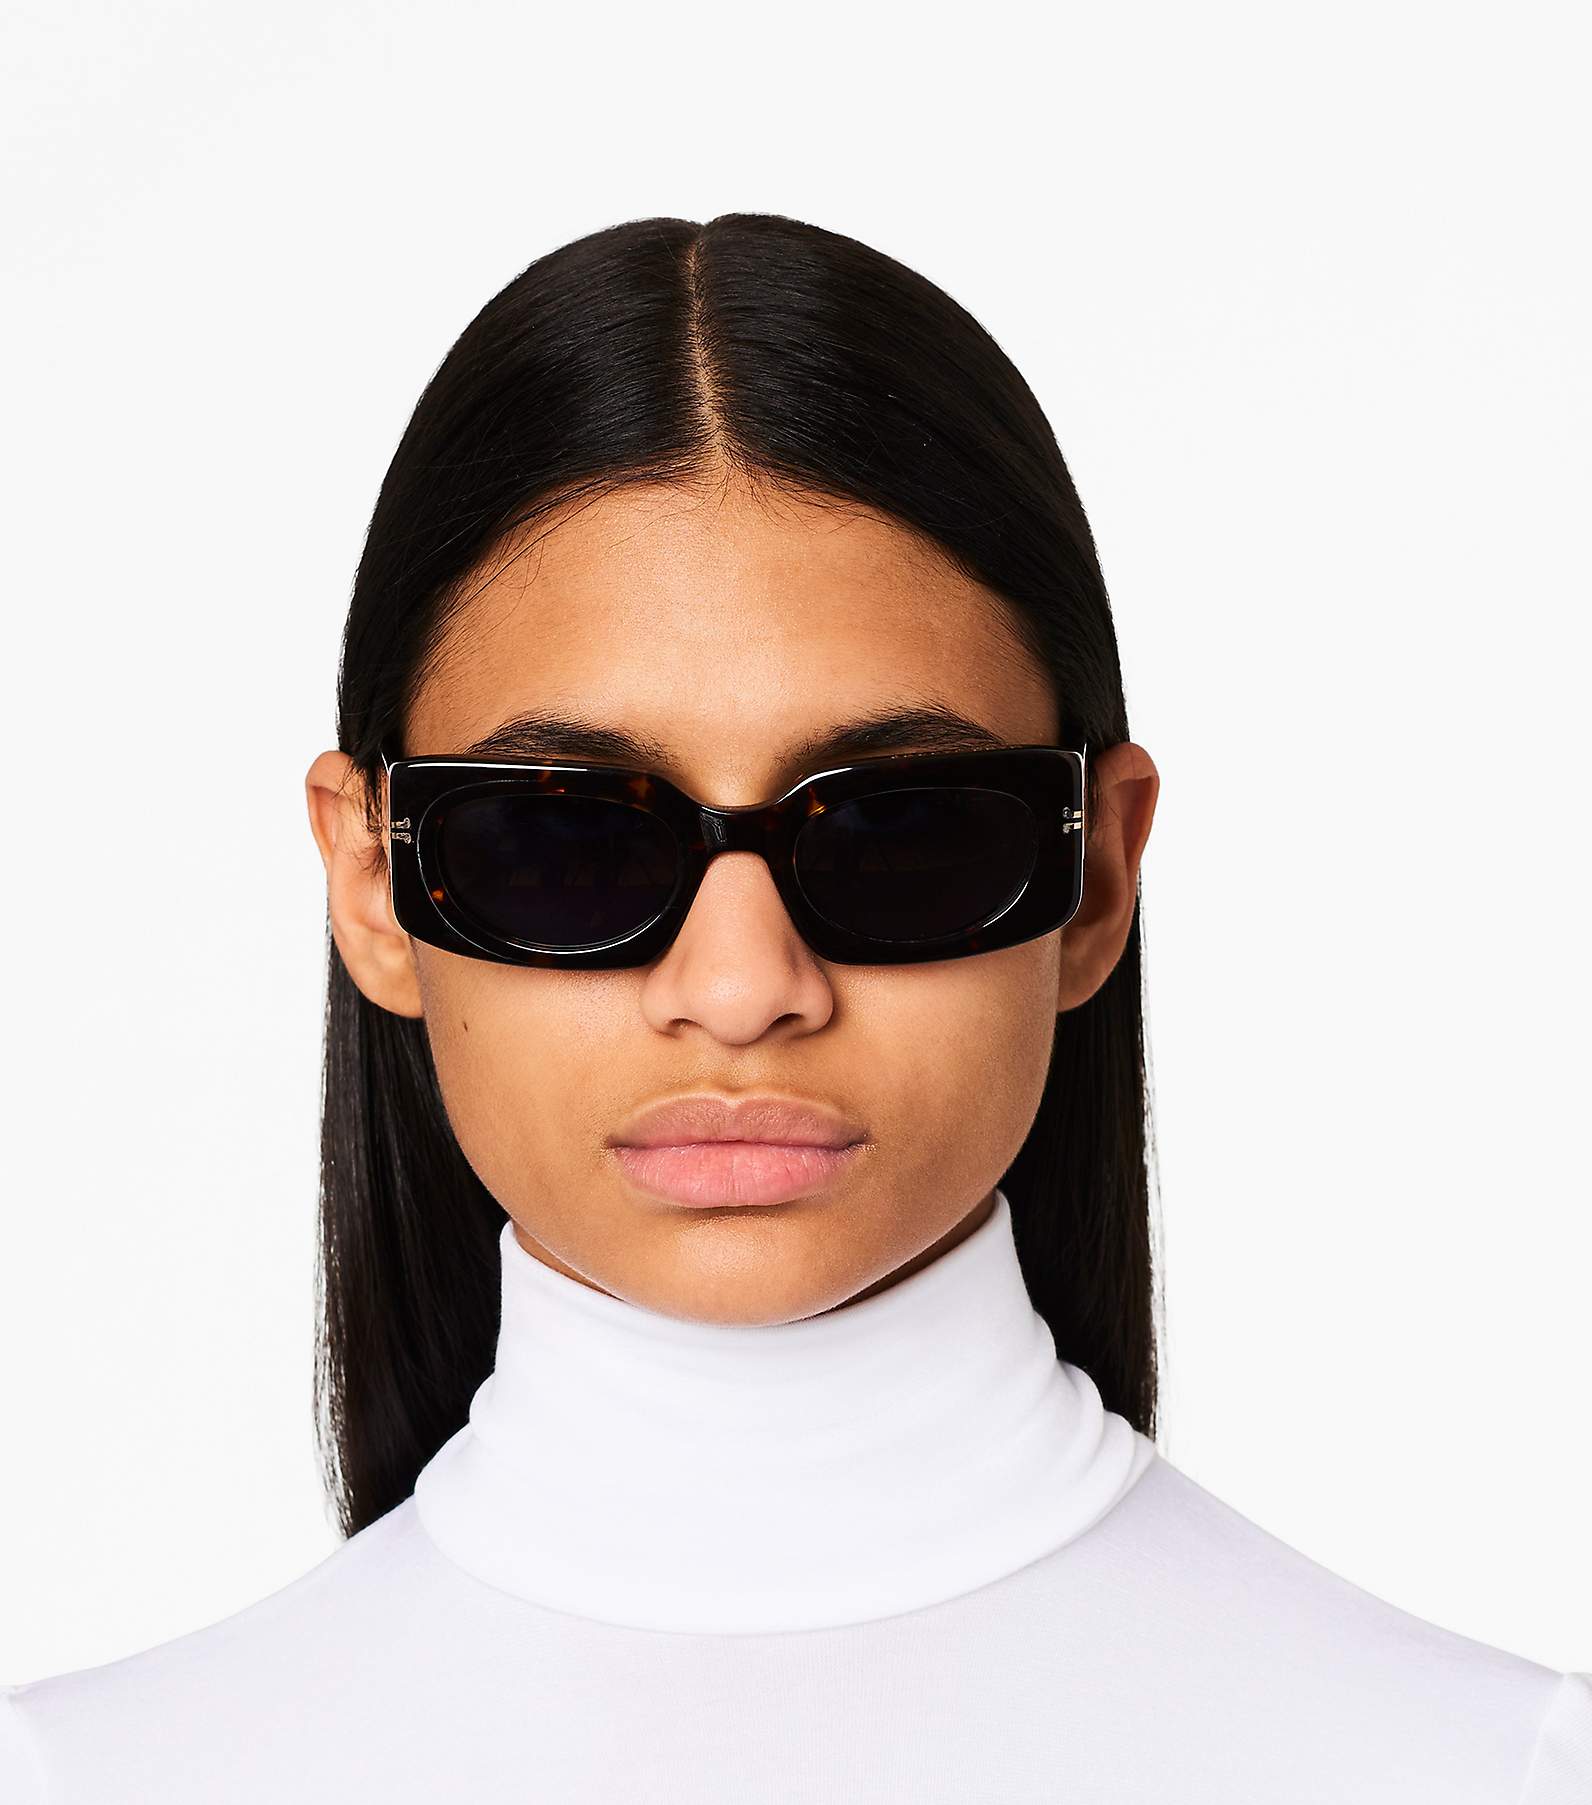 Marc Jacobs Sunglasses for Men & Women